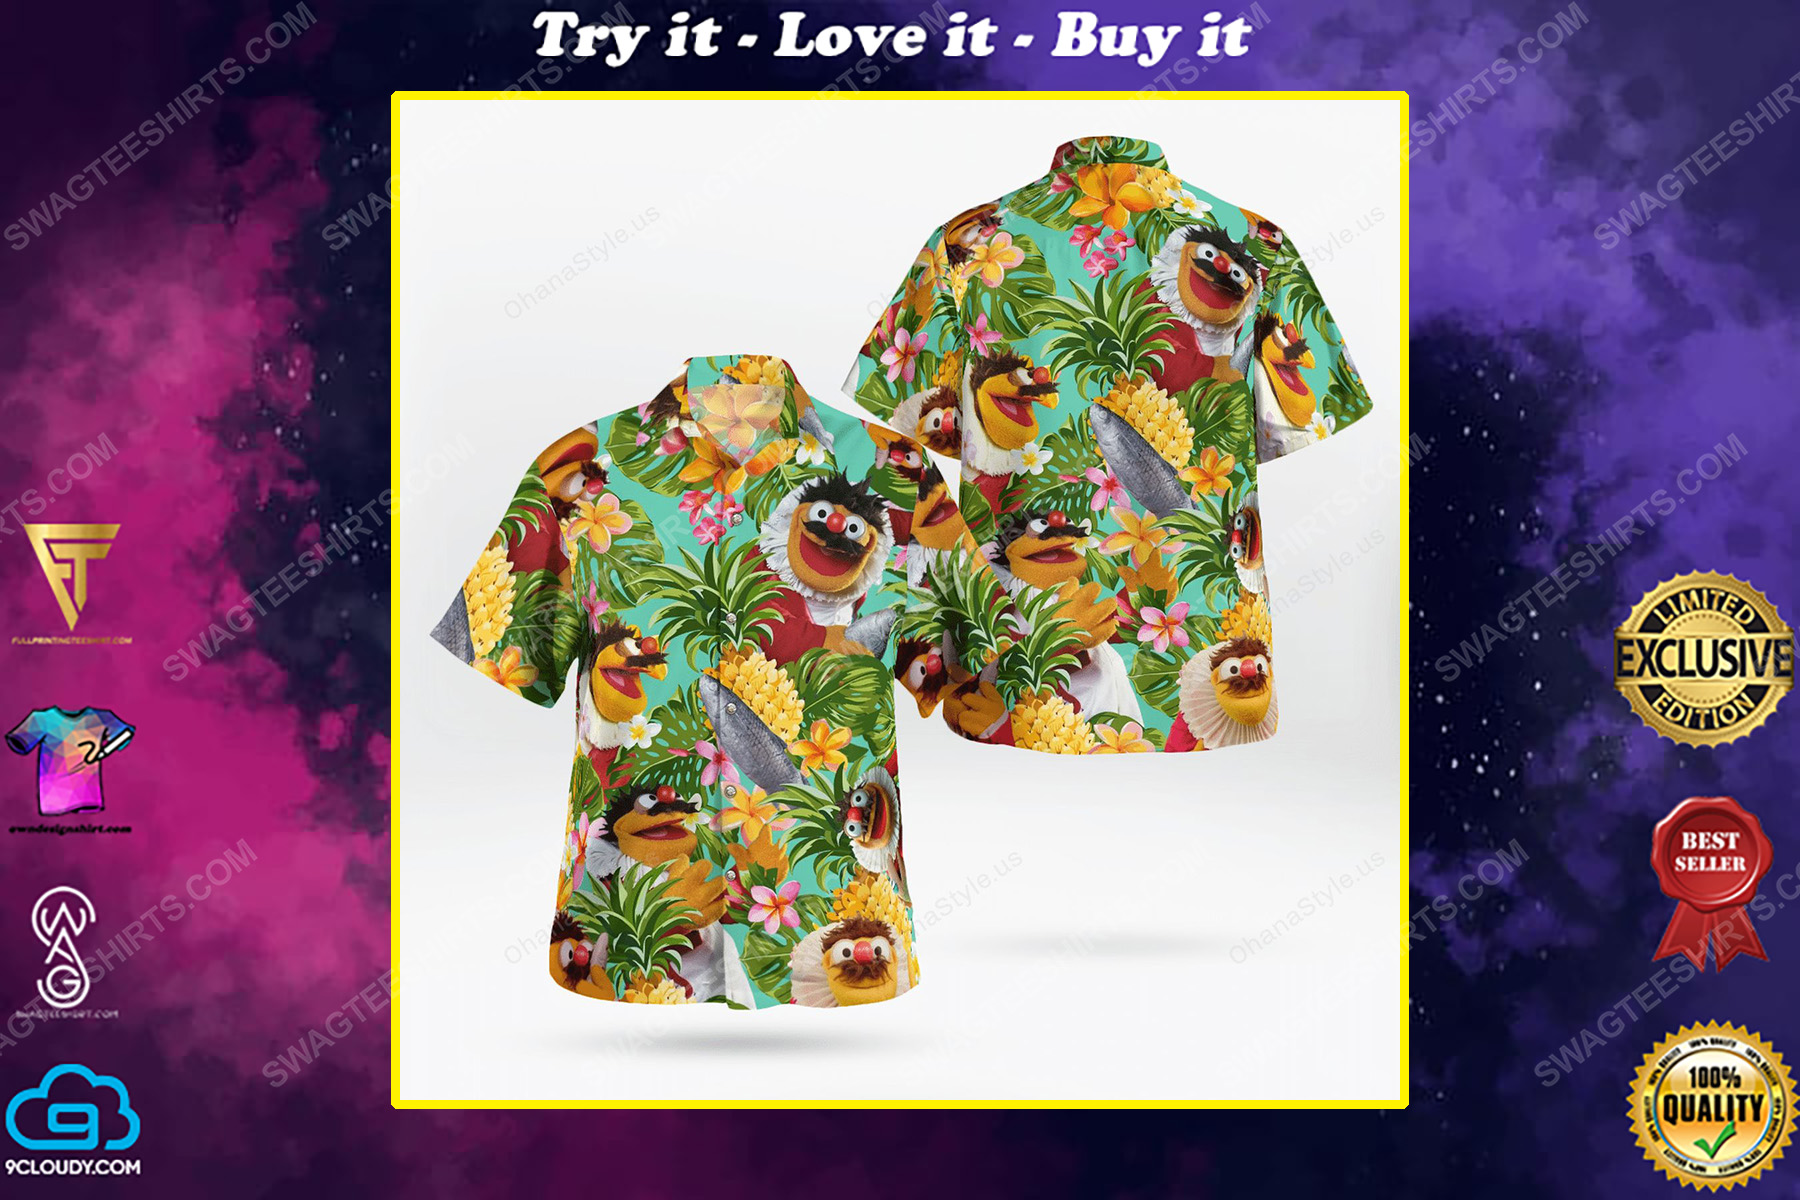 The muppet show lew zealand hawaiian shirt